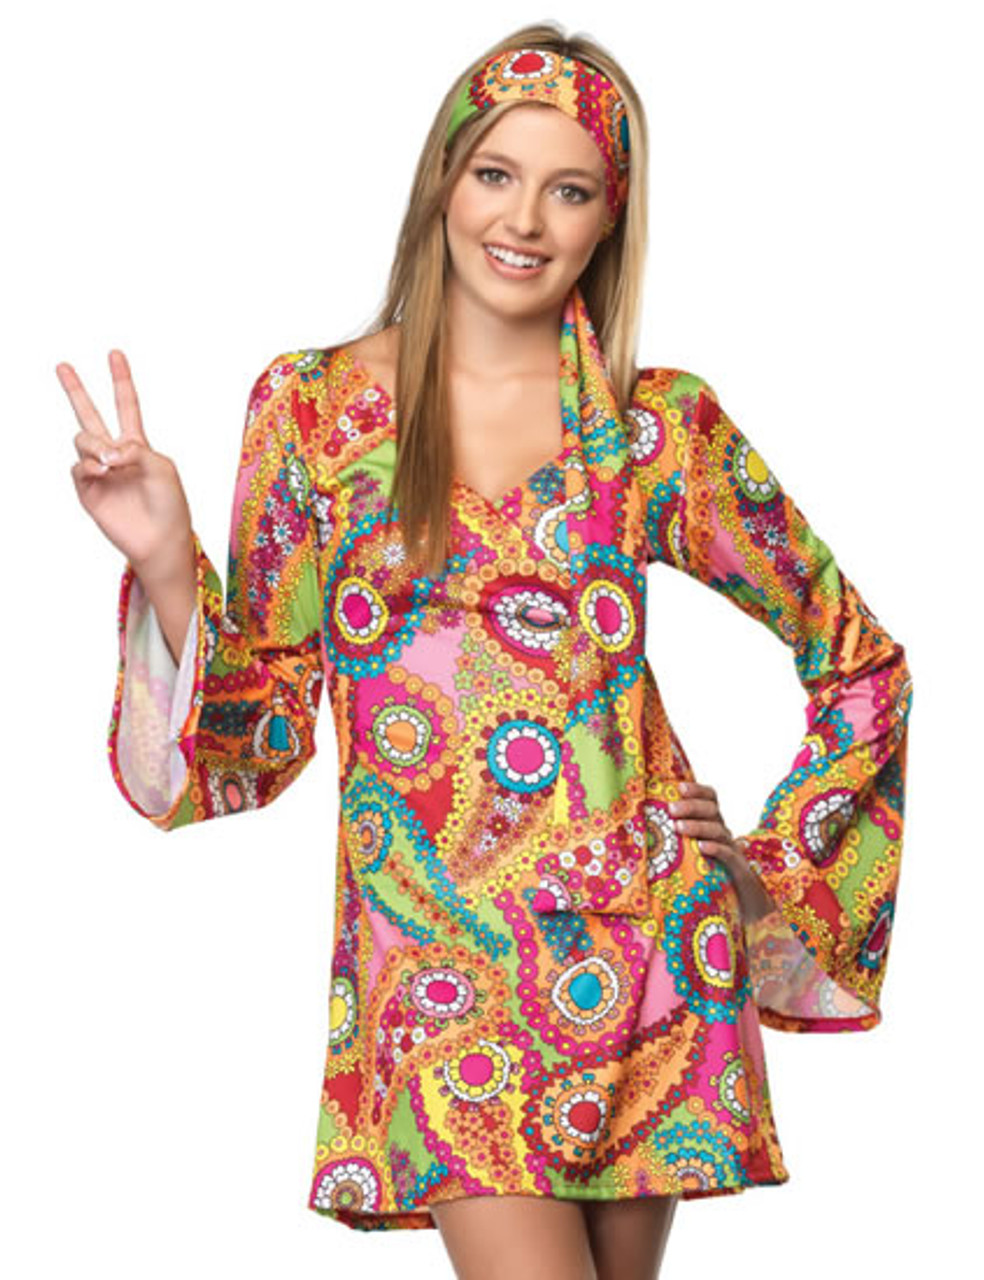 LA-J48013, Teen Hippie Chick Costume